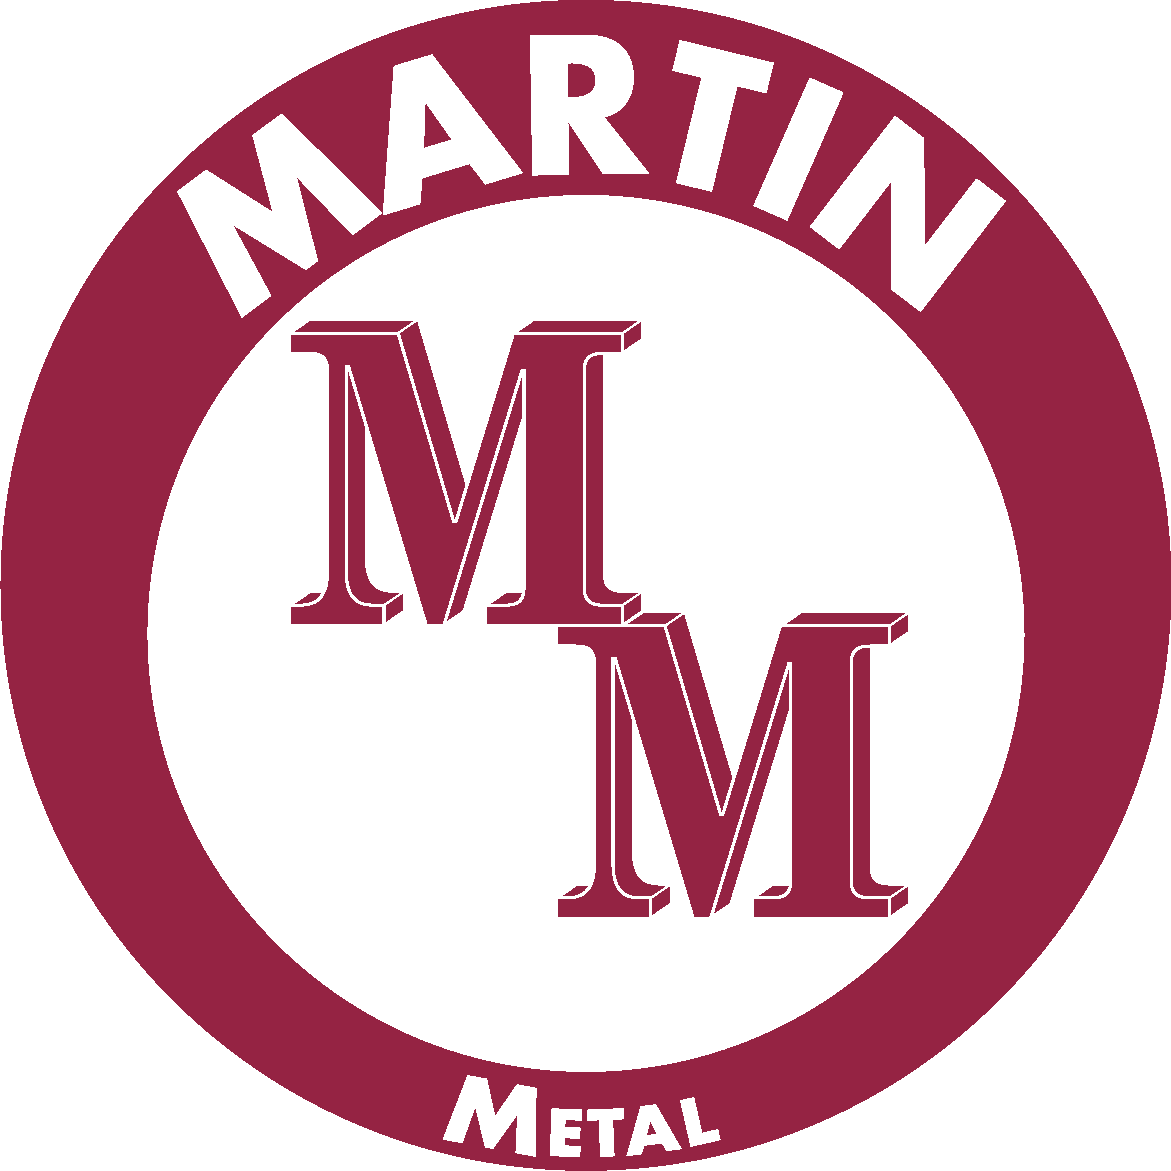 Martin Metal LLC